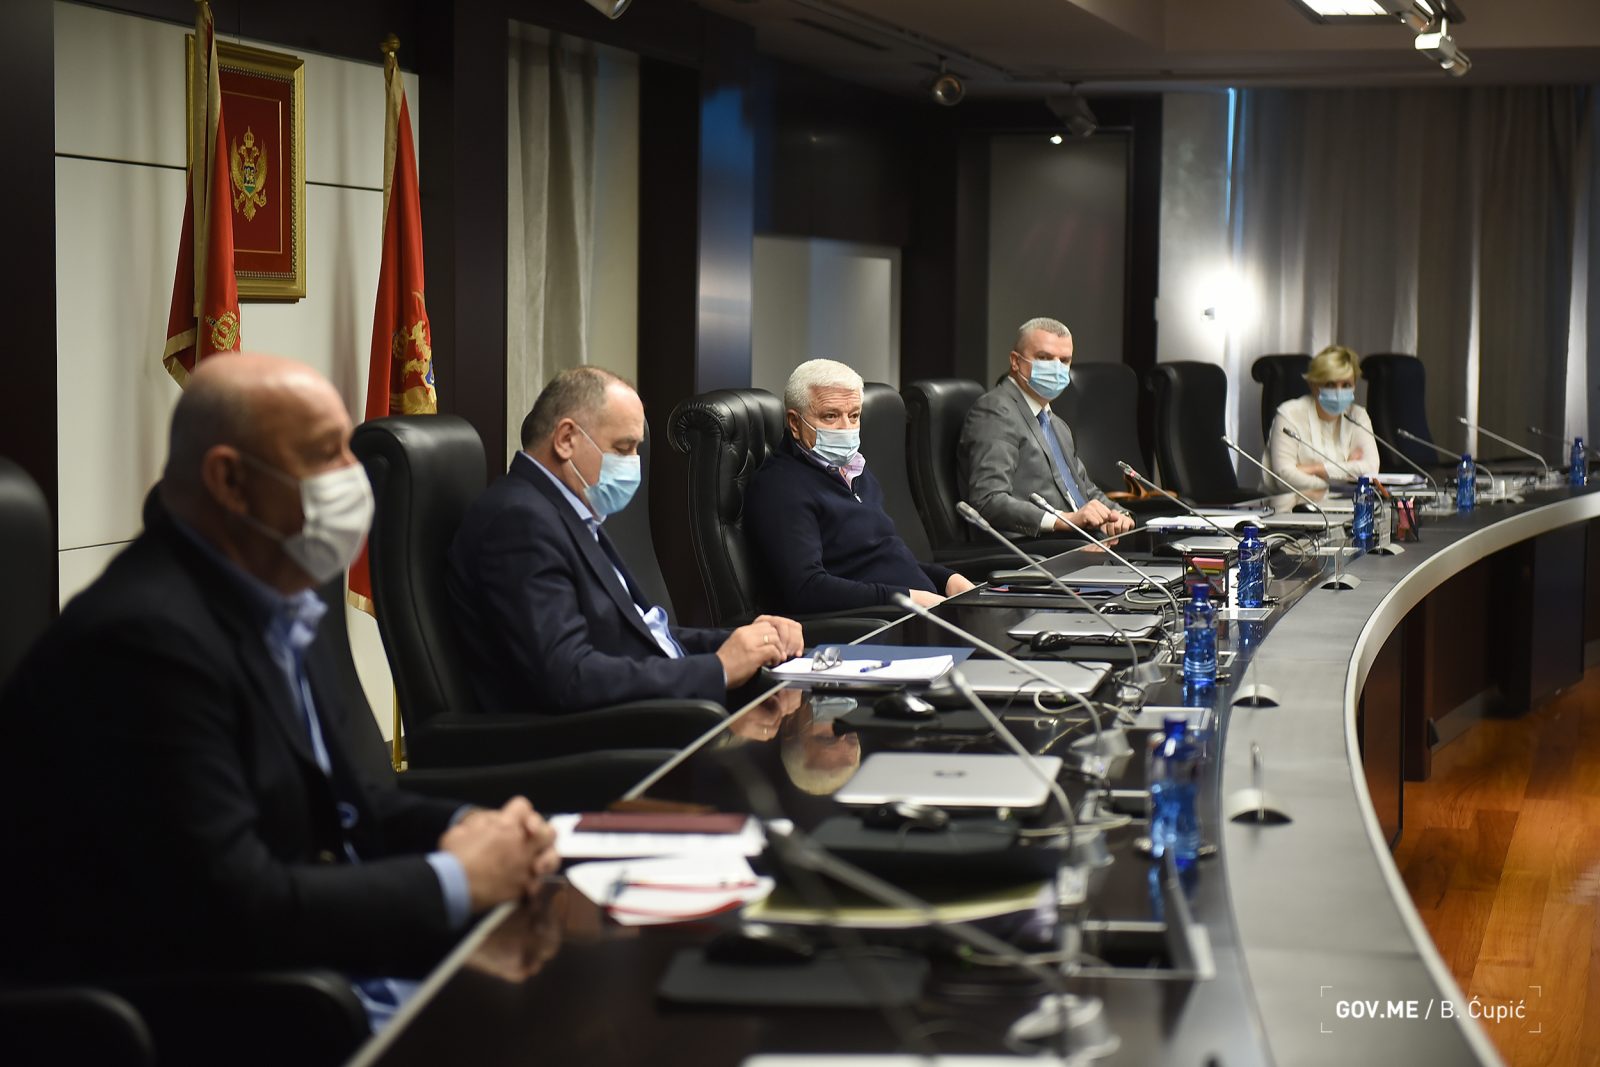 Montenegro Urged to Delay Law Change Debate in Pandemic